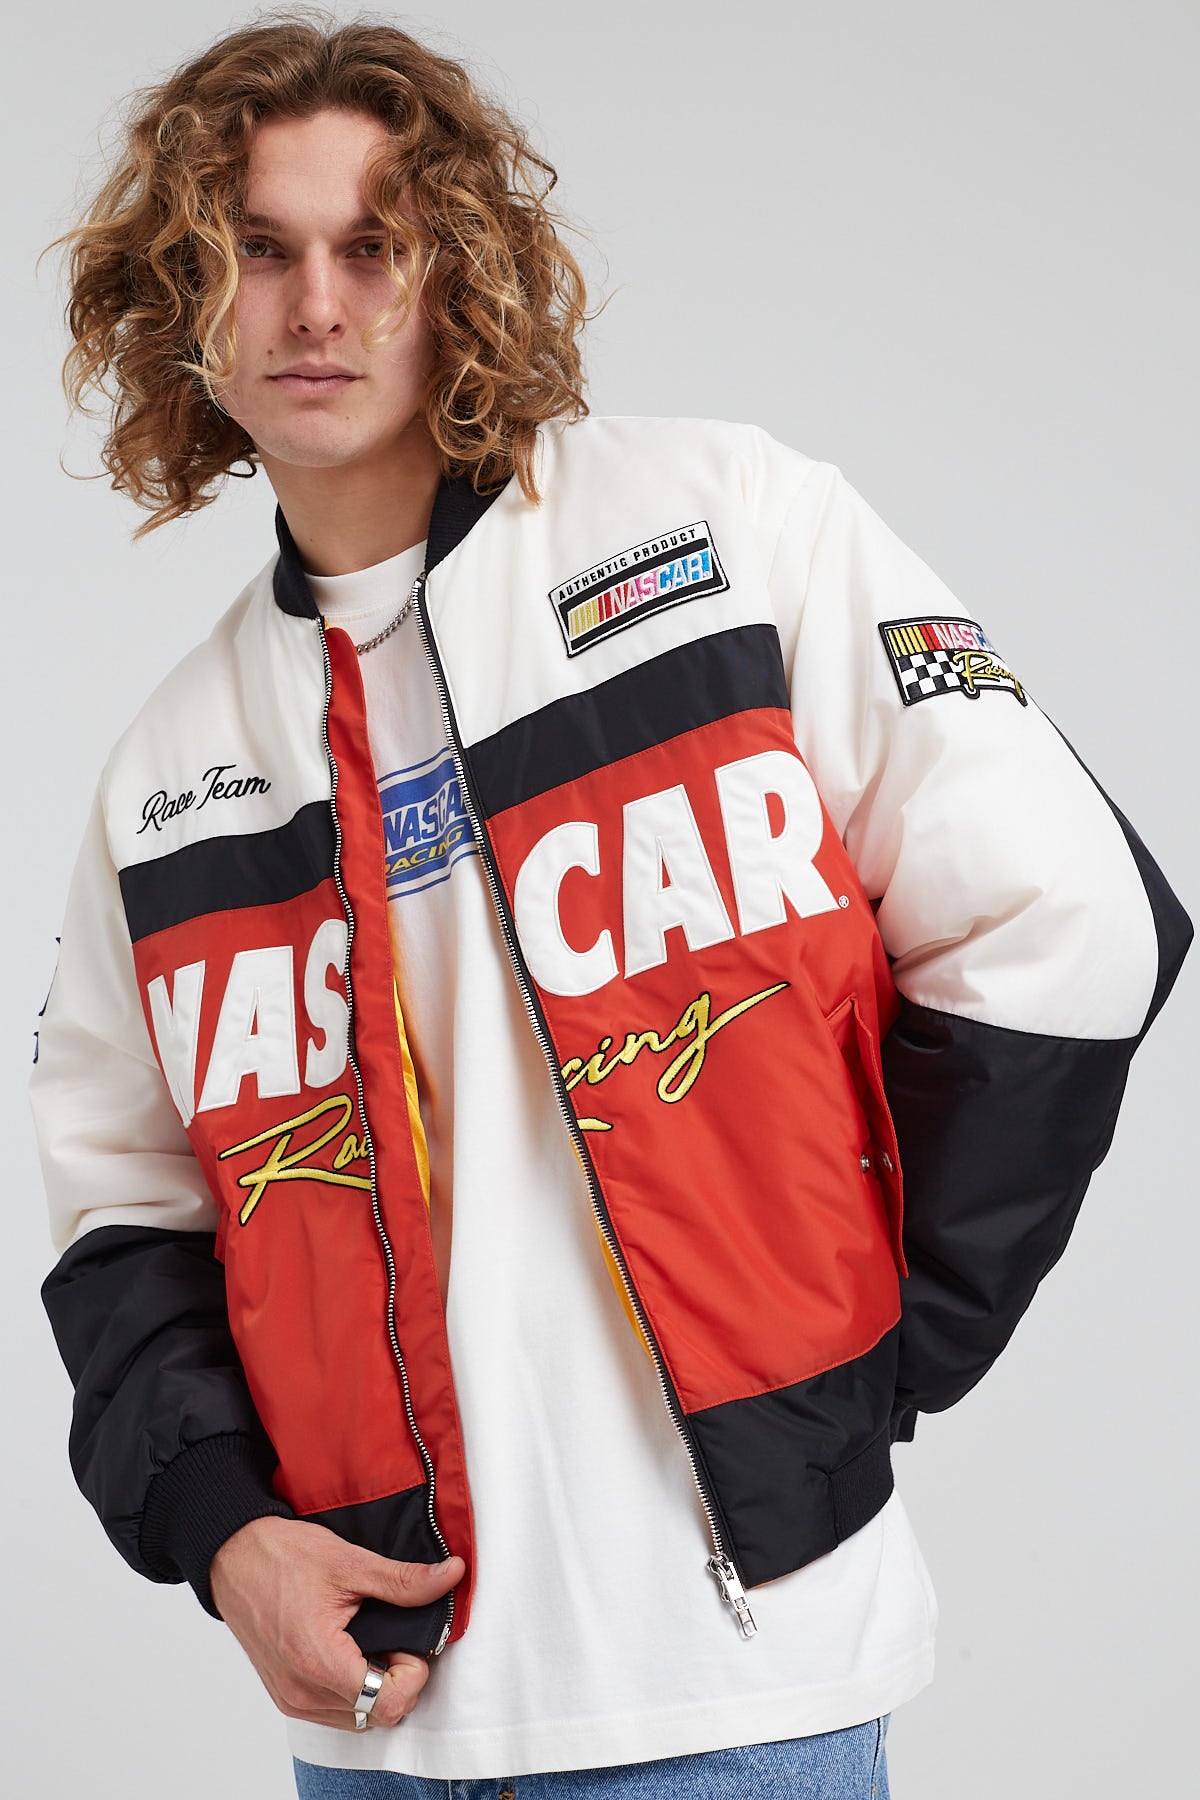 Tne Nascar Racing Team Jacket Vintage White/Red